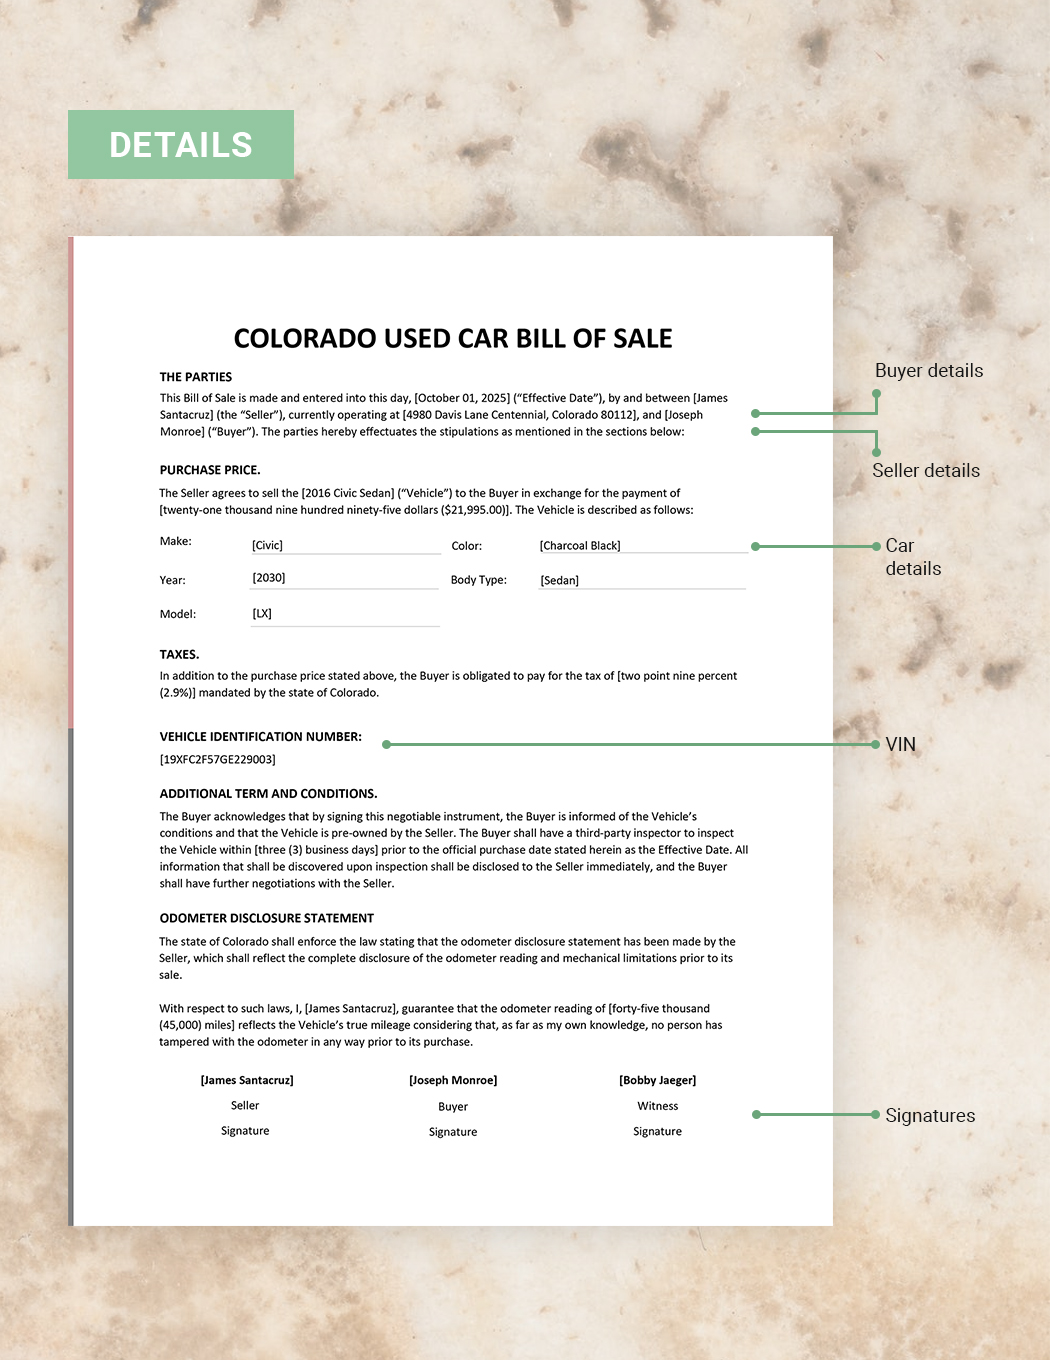 Colorado Used Car Bill of Sale Template